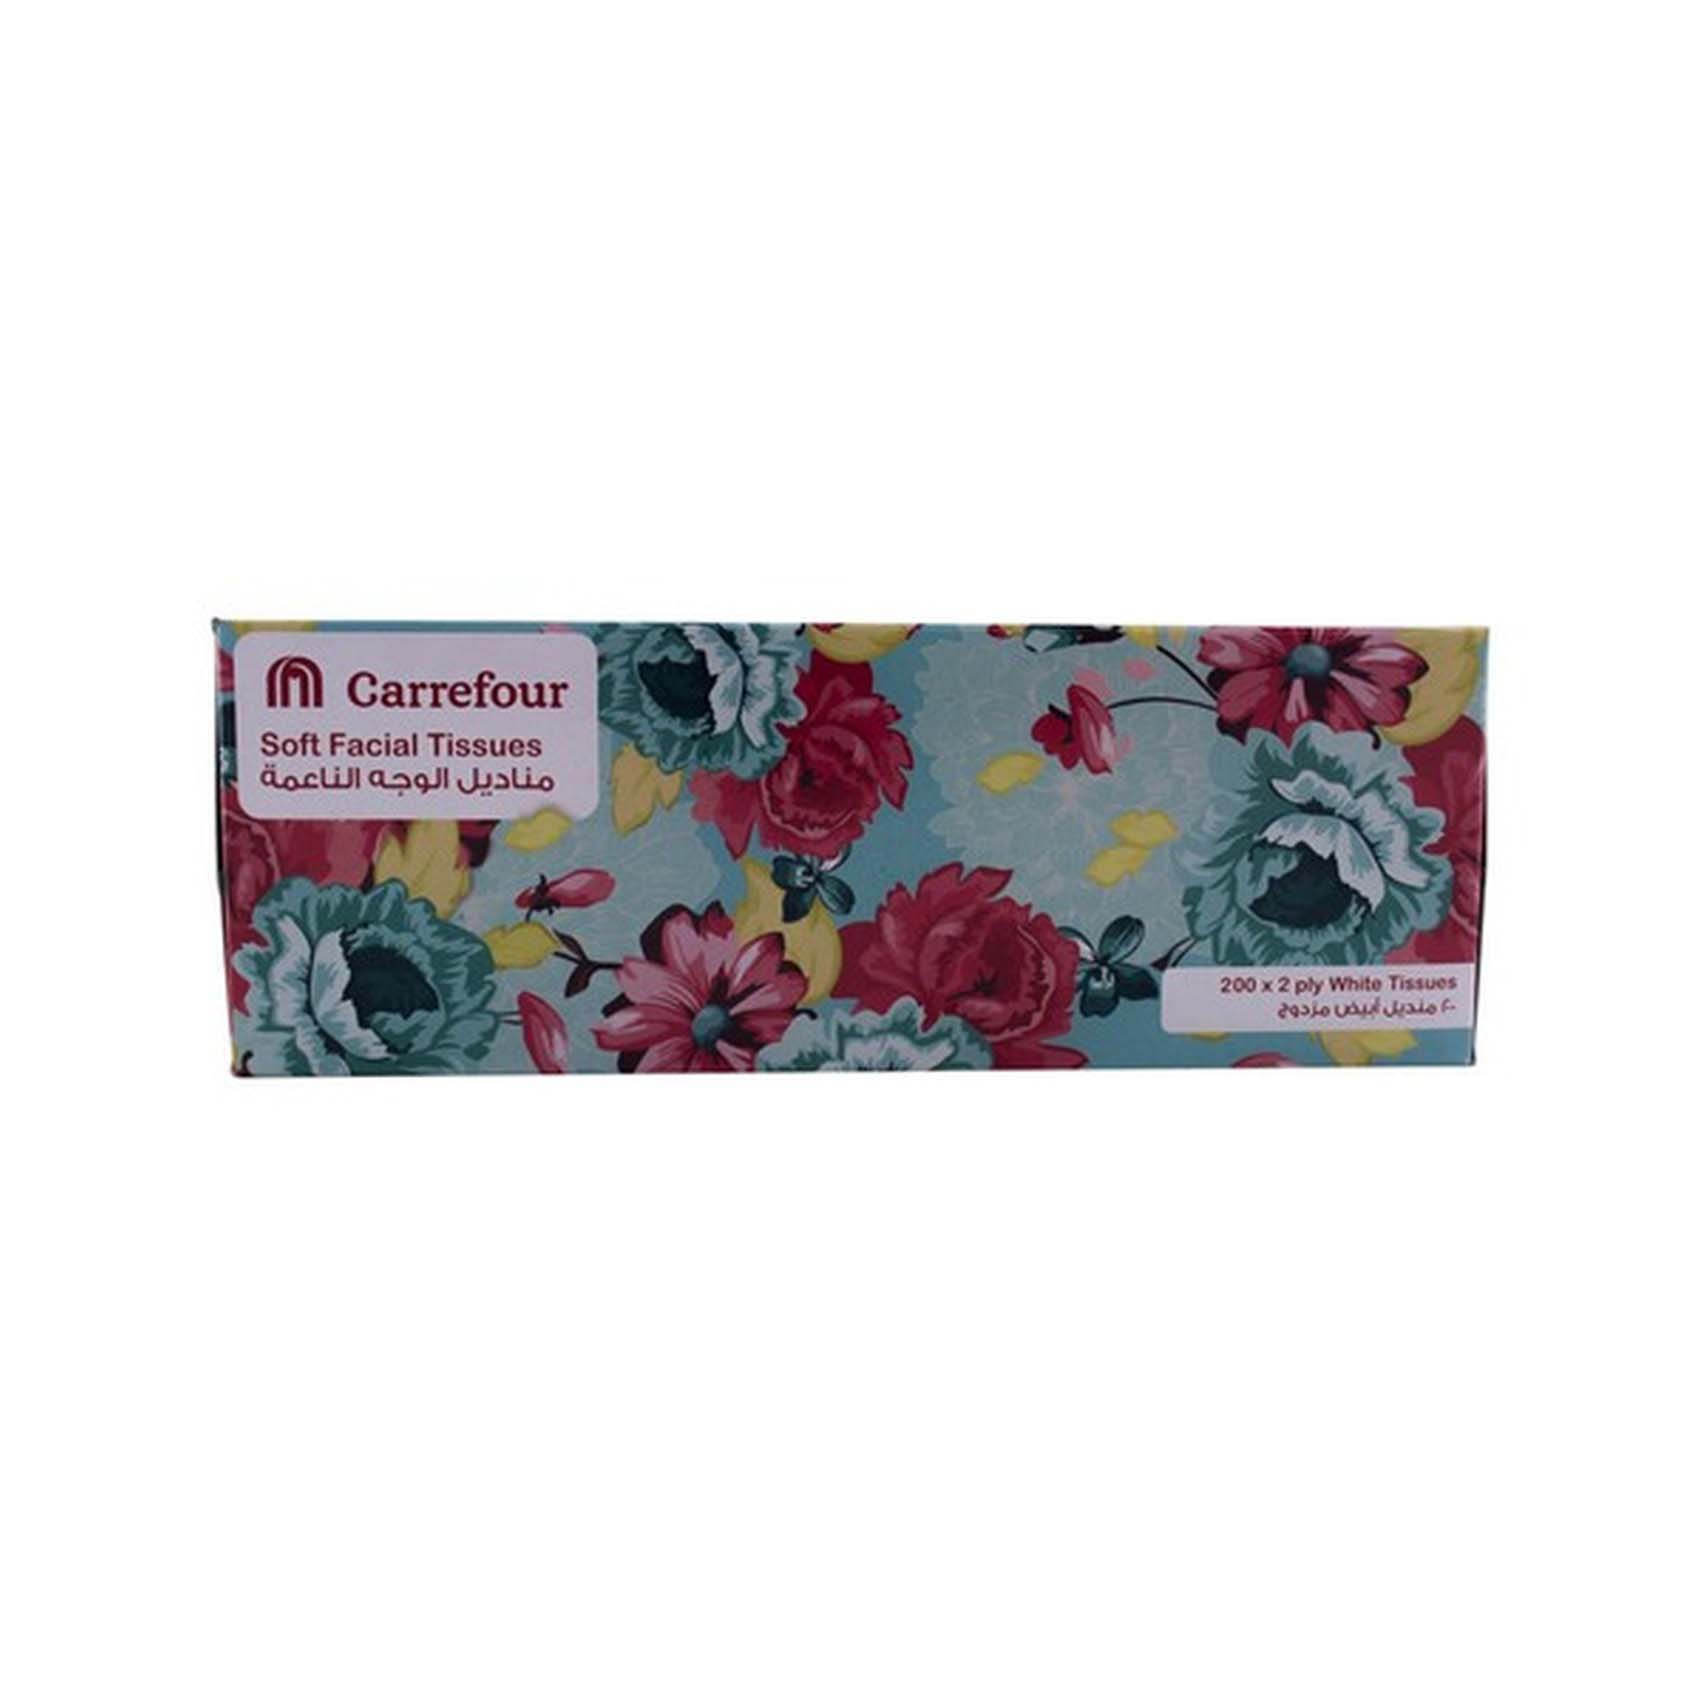 Carrefour Classic Facial Tissues 200 Sheets